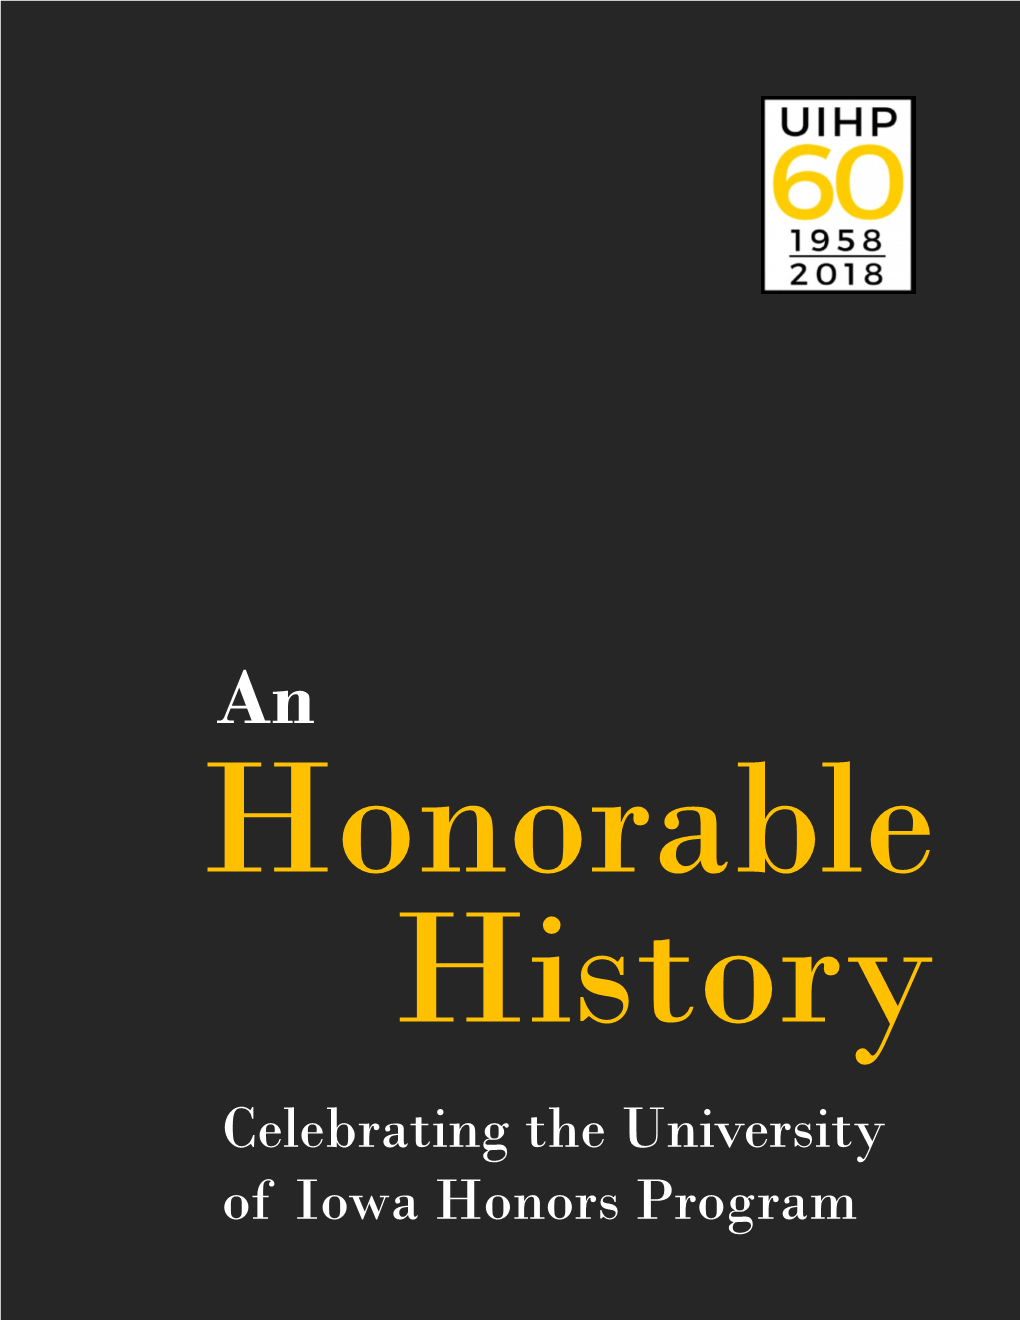 Celebrating the University of Iowa Honors Program